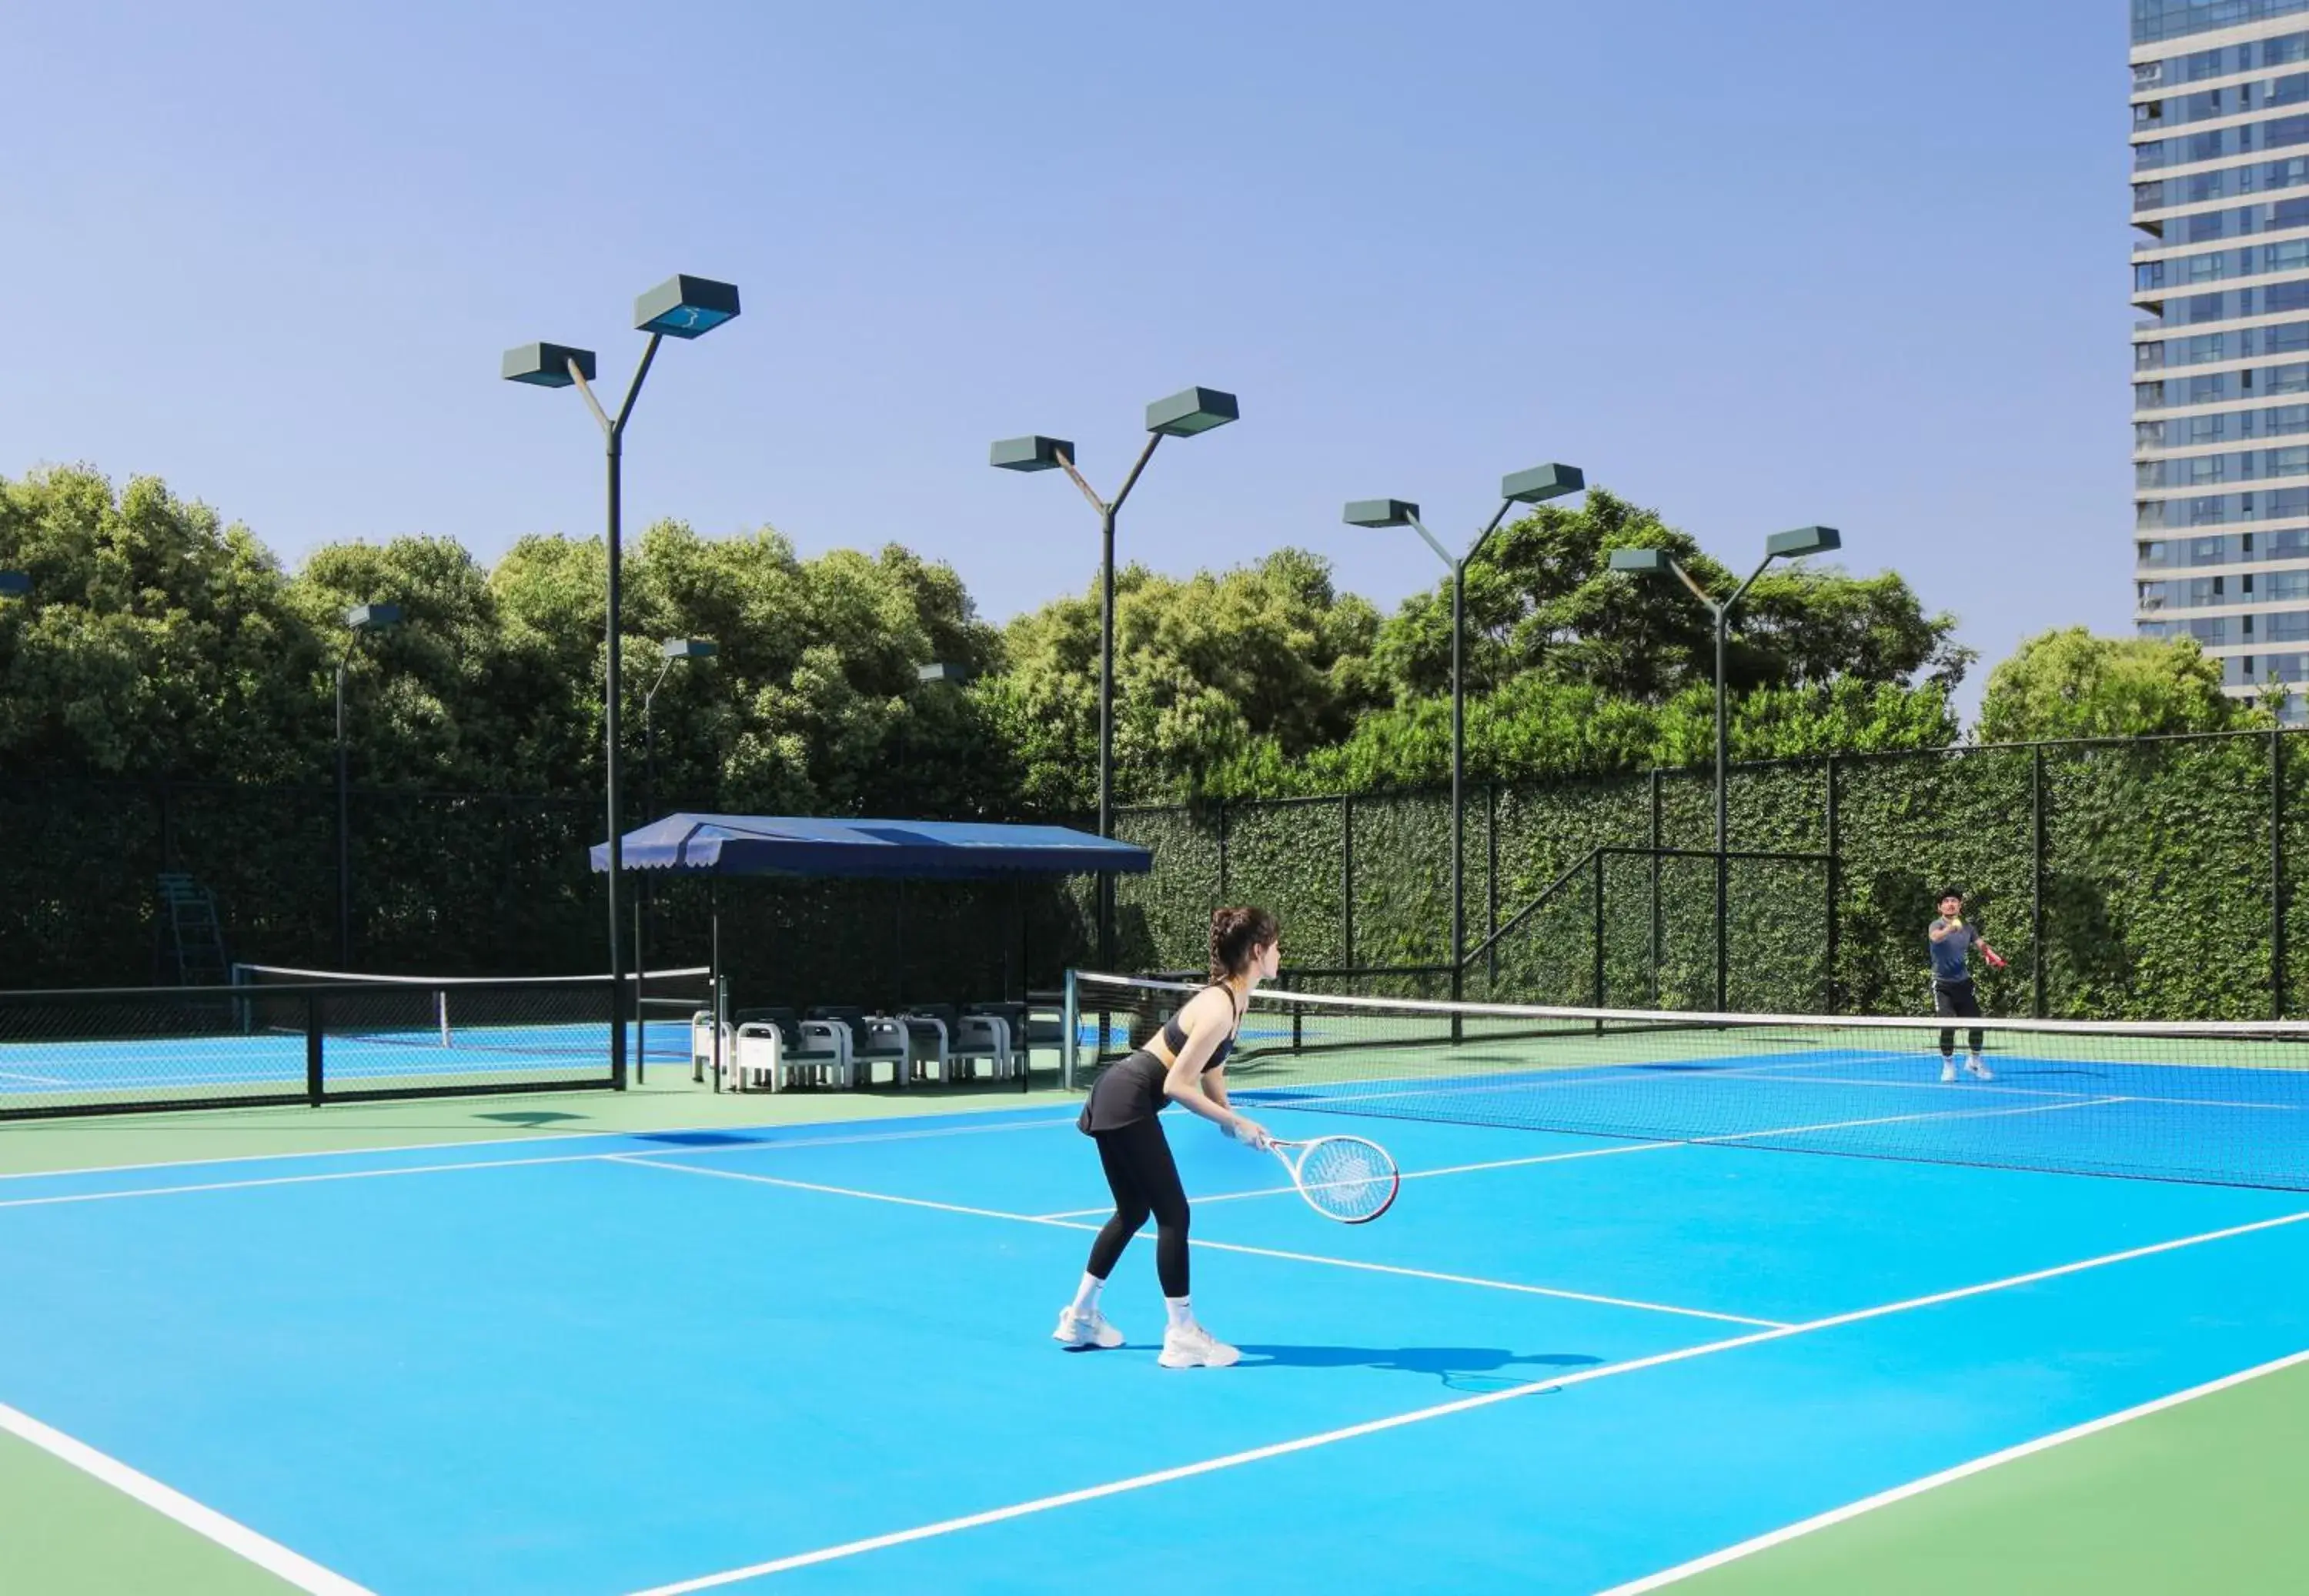 Tennis court, Other Activities in Pan Pacific Ningbo